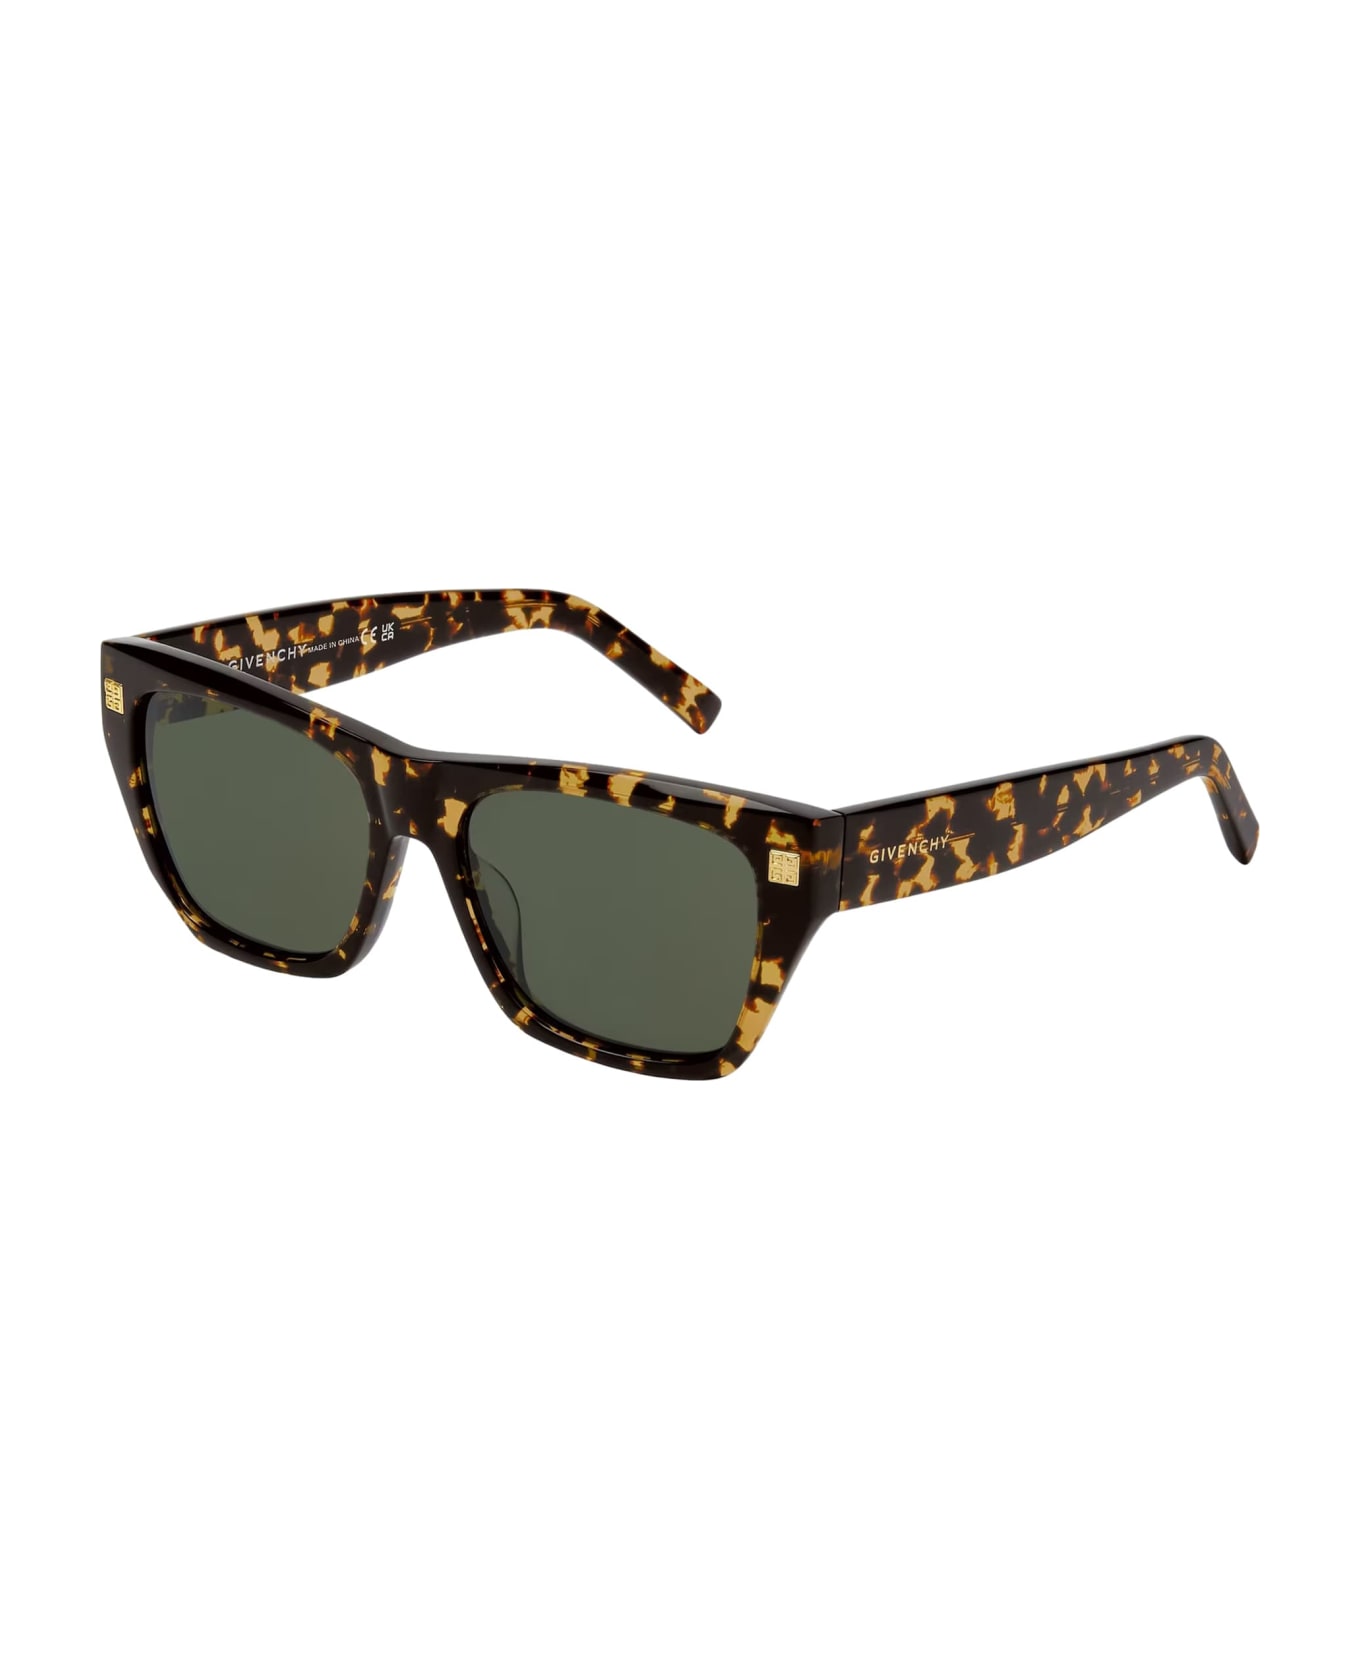 Givenchy Eyewear Gv40061u - Havana Sunglasses - Havana サングラス